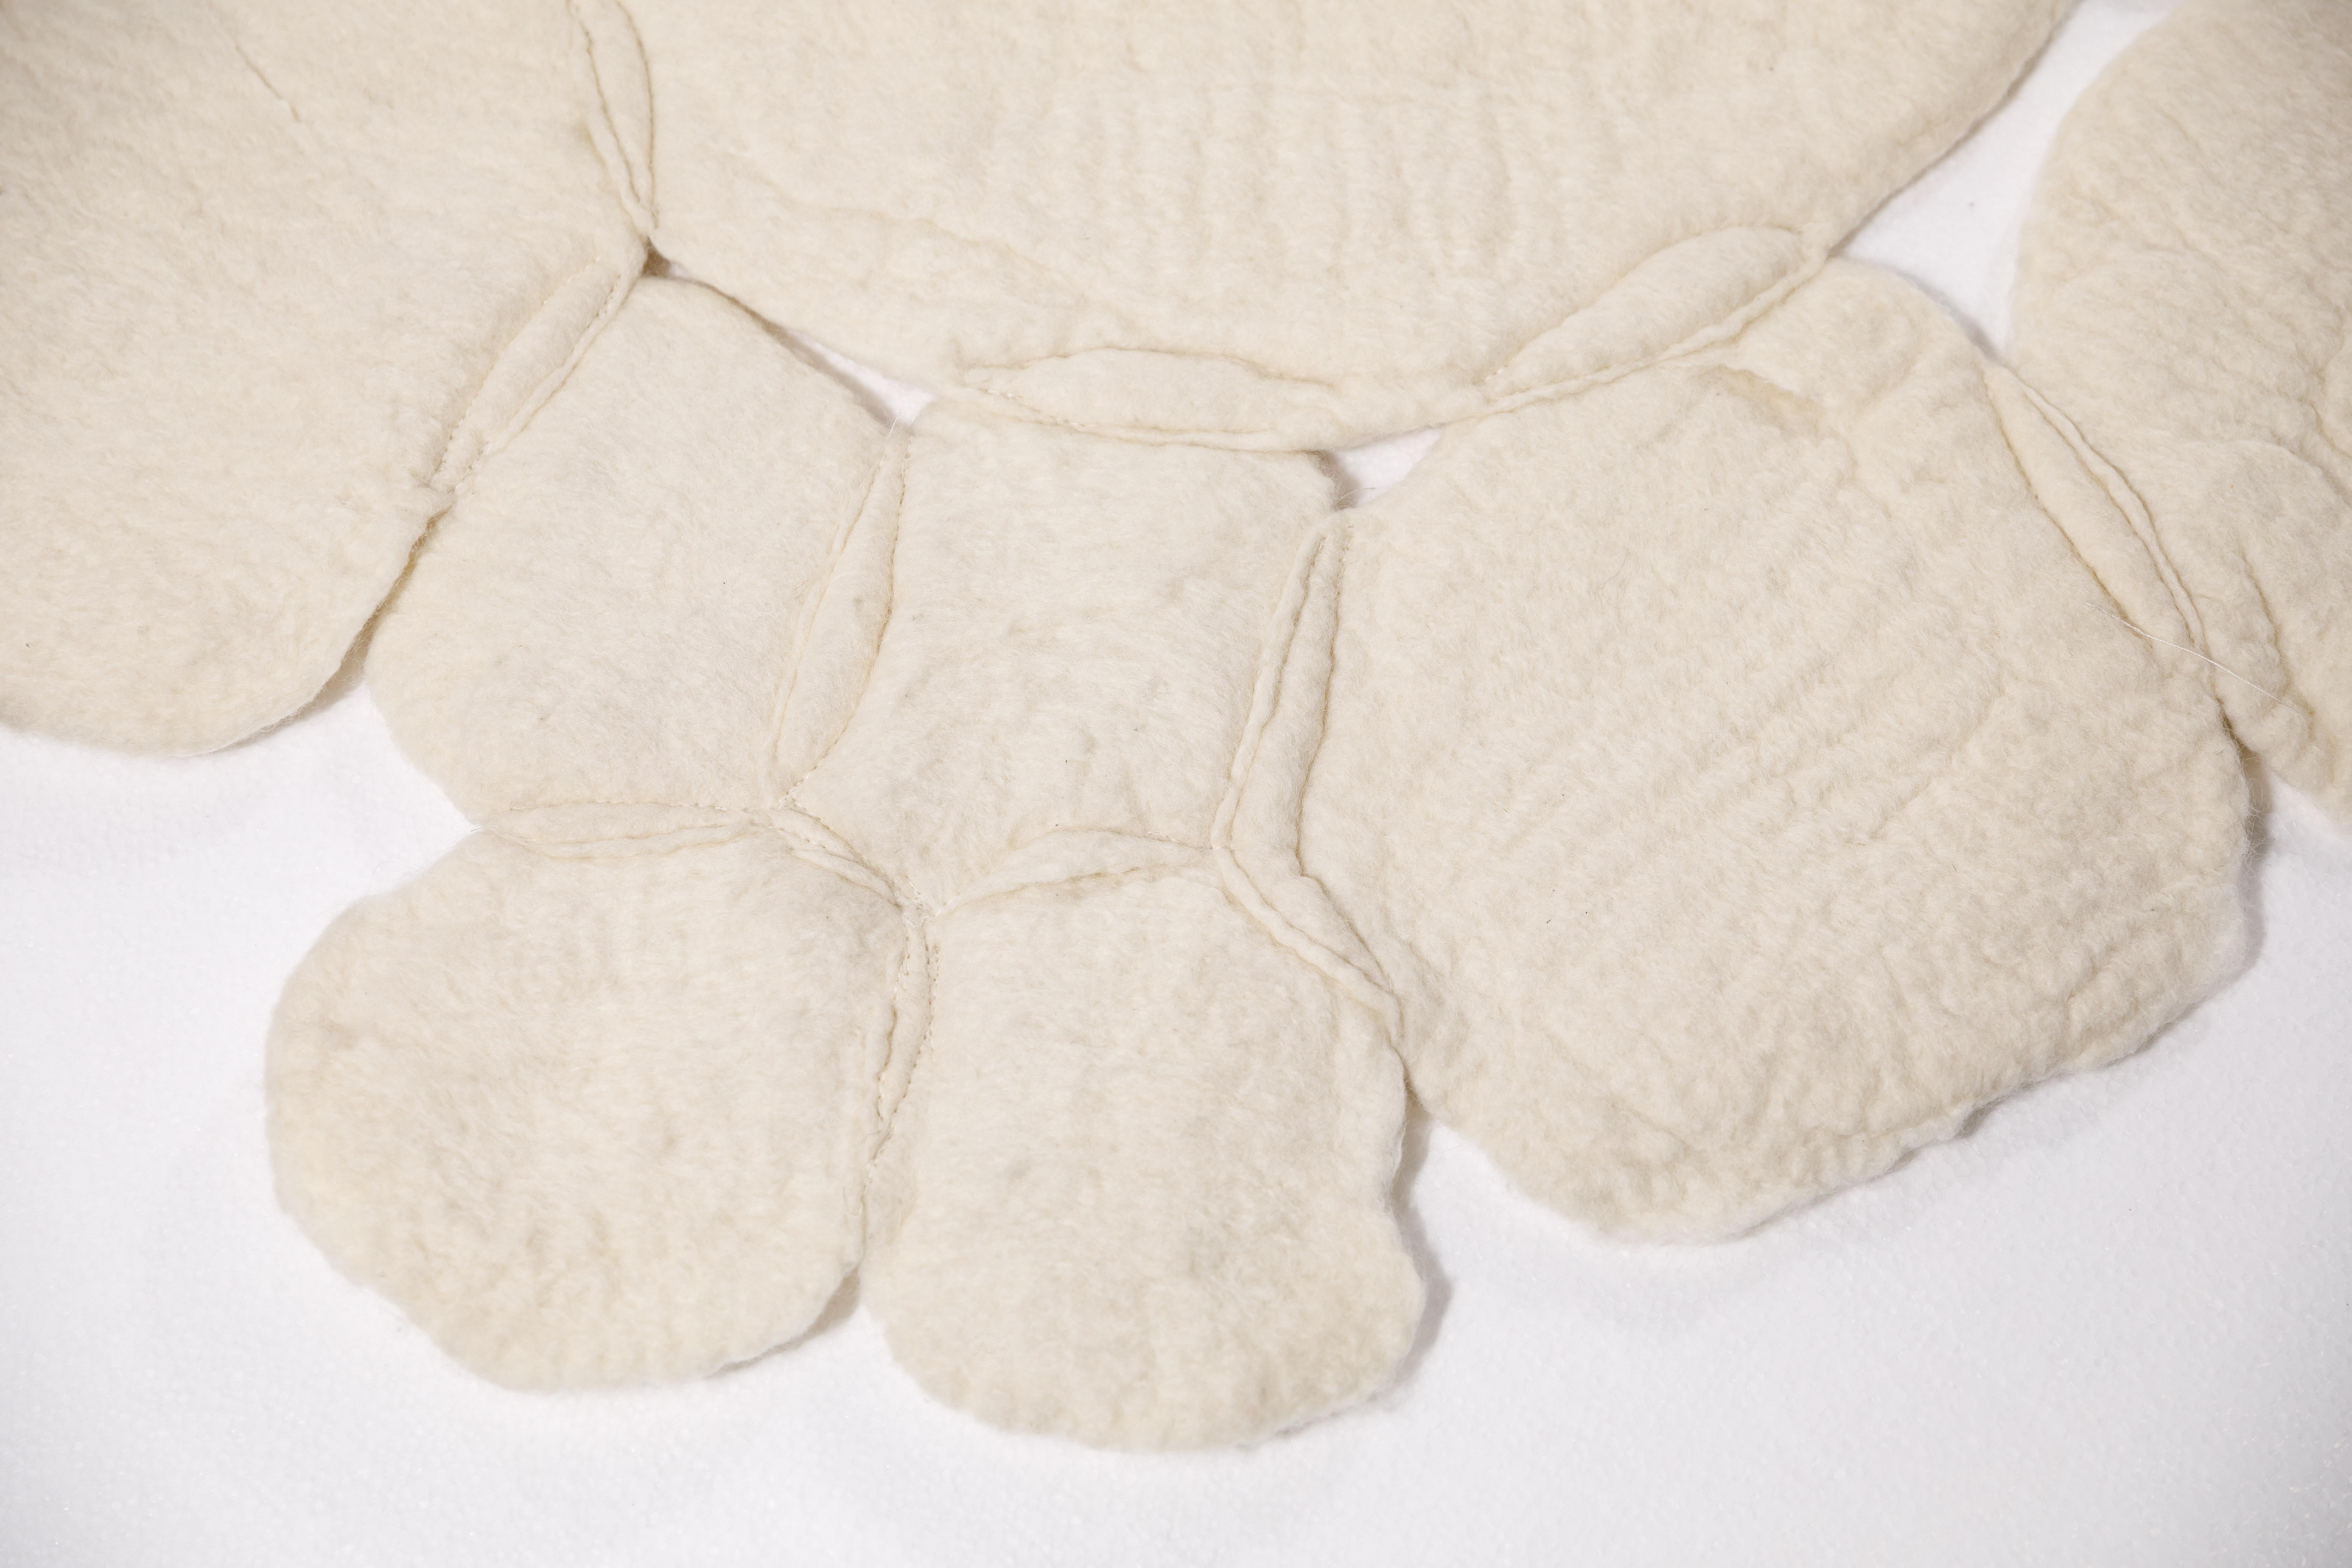 Rustic Contemporary “Nevoeiro” Felted Wool Blanket or Rug by Inês Schertel, Brazil 2019